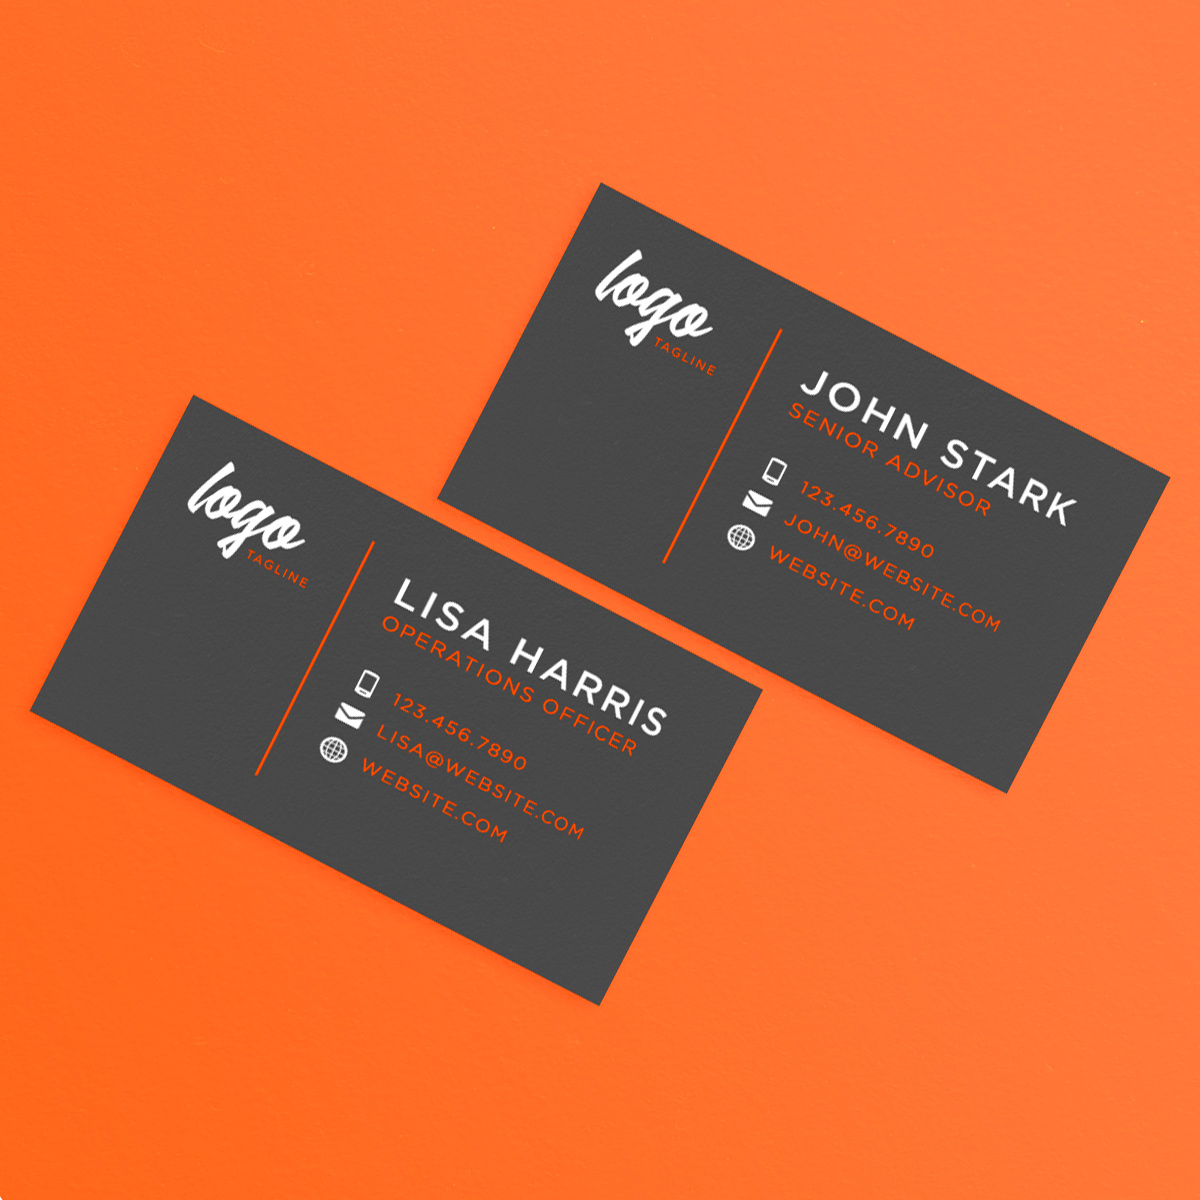 Business card design - Lillian James Creative